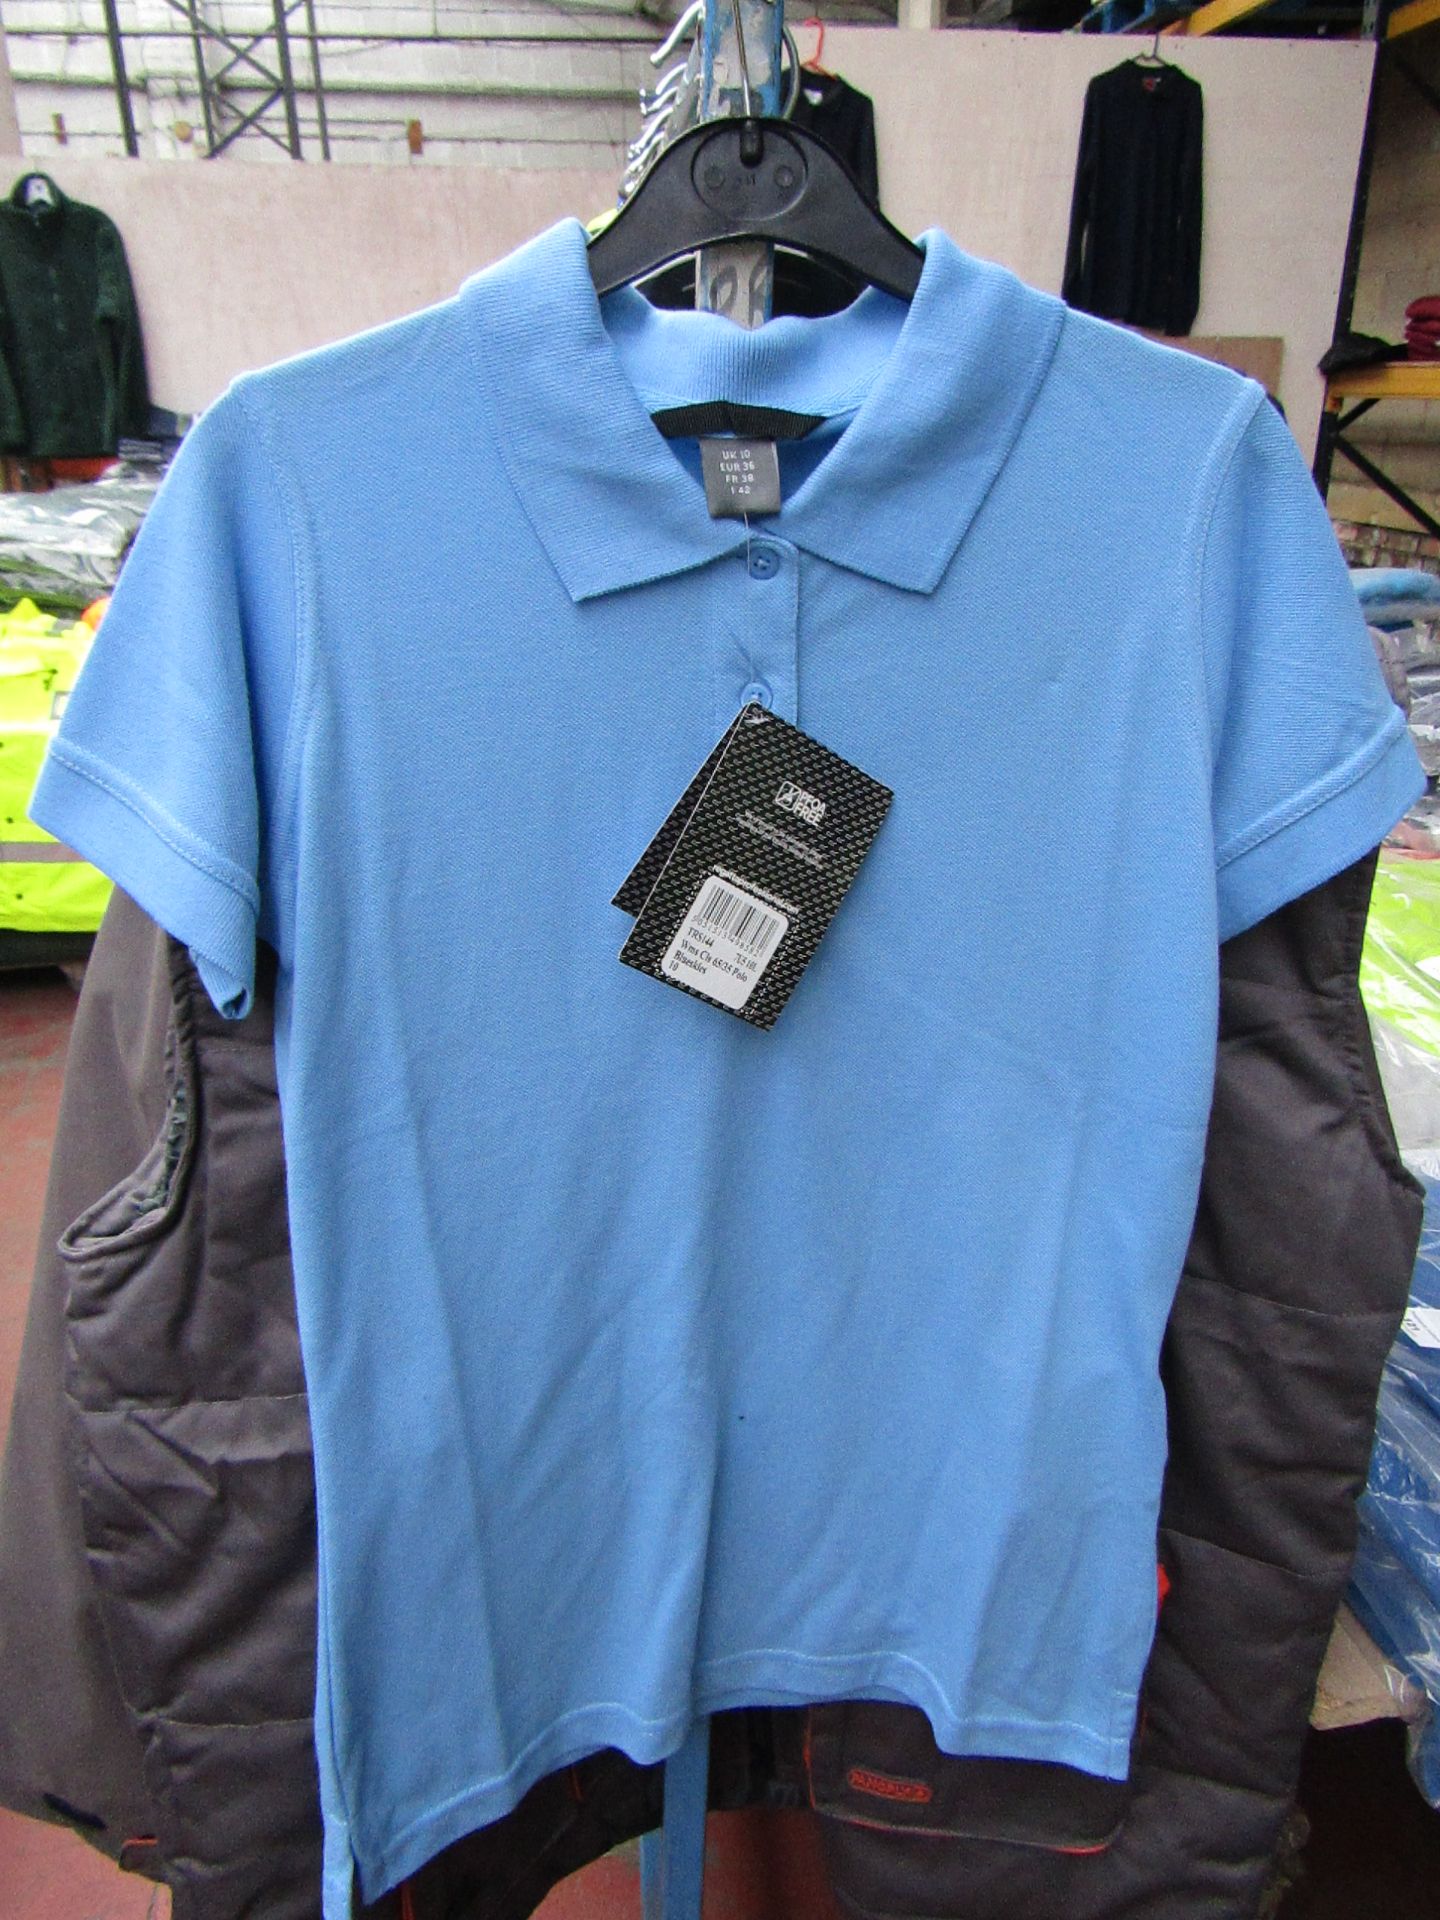 2x Ladies Regatta Blueskies Polo Shirt, Size 12. New in Packaging